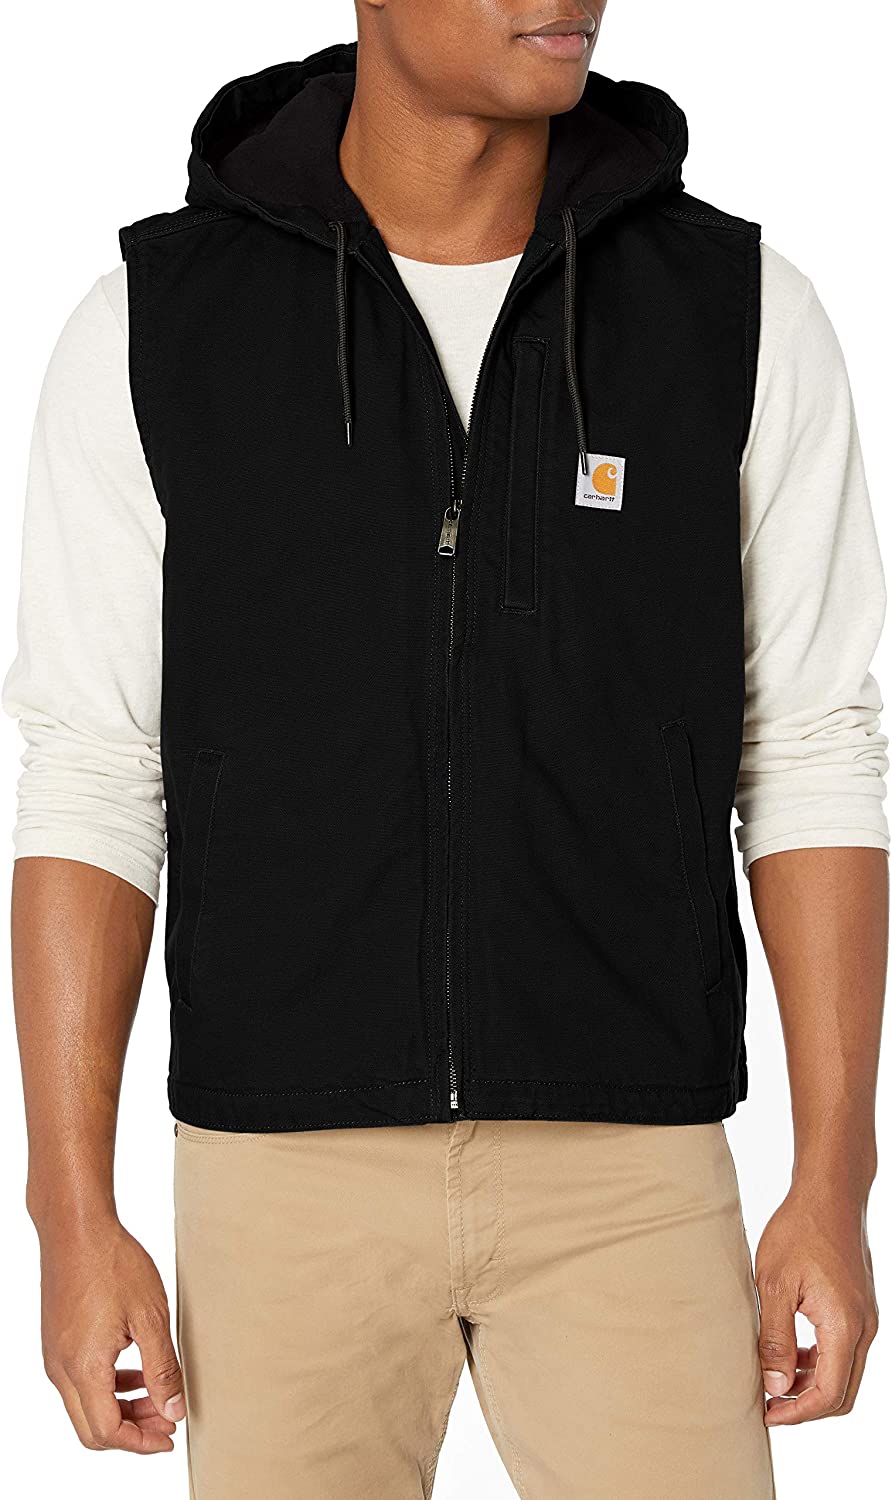 Carhartt mens Knoxville Vest (Regular and Big & Tall Sizes) | eBay